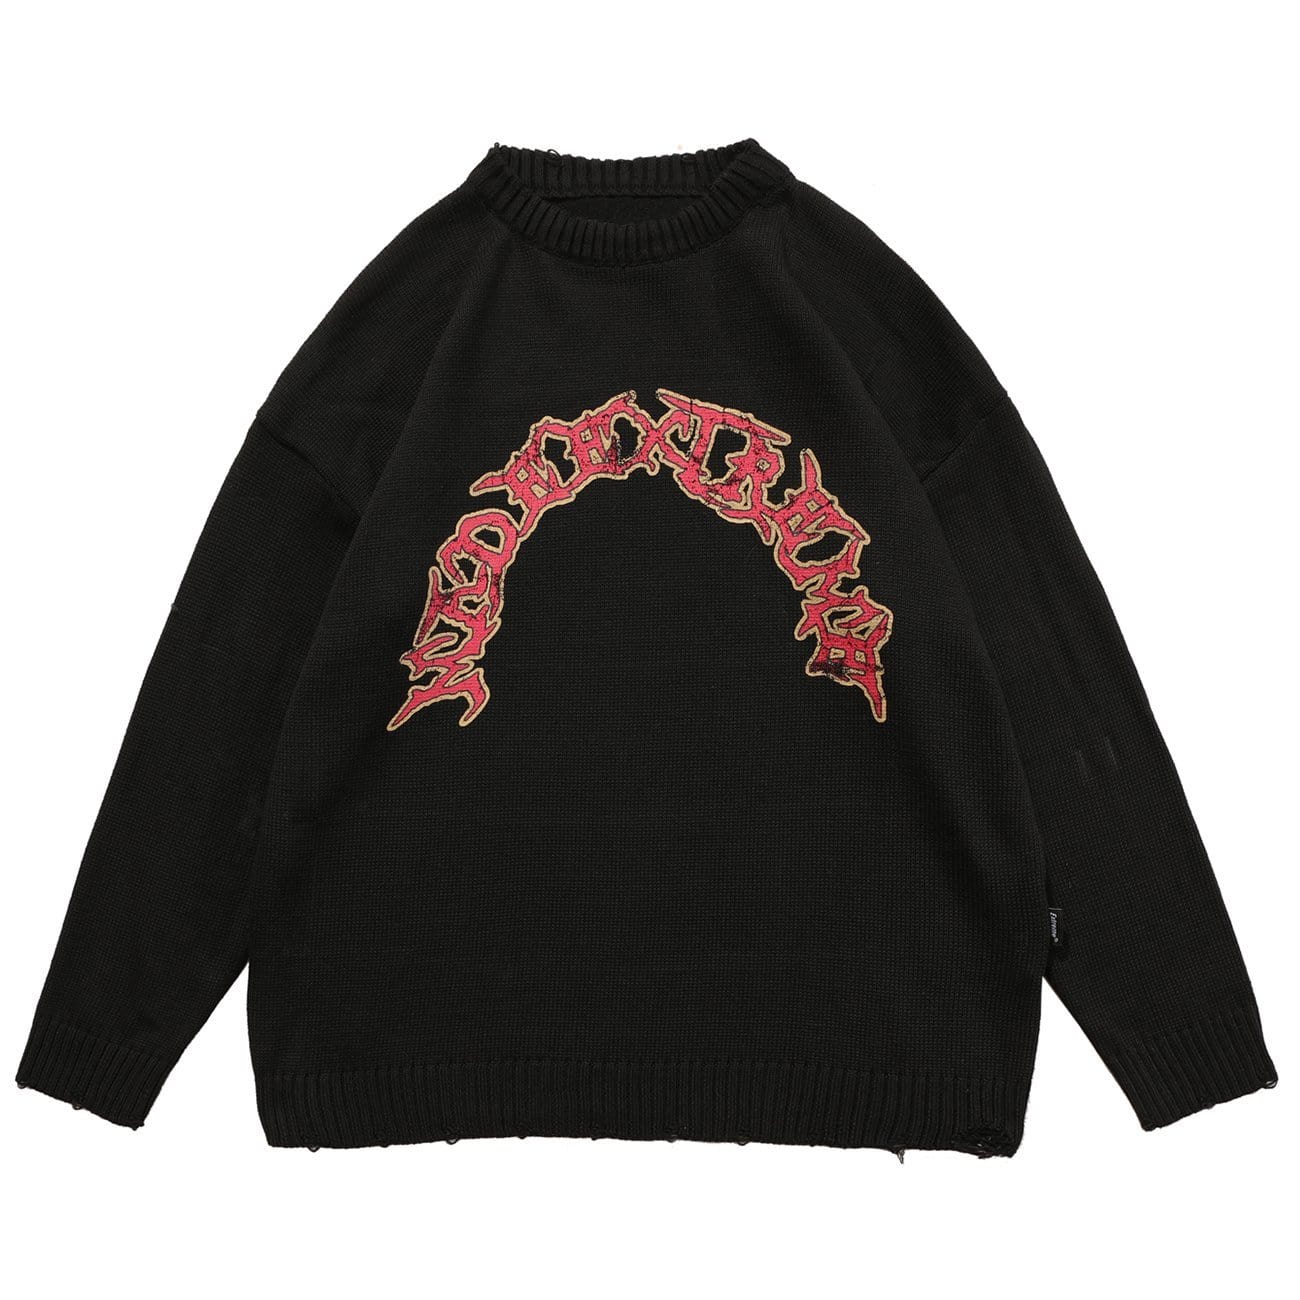 TO Dark Character Graffiti Knitted Sweater